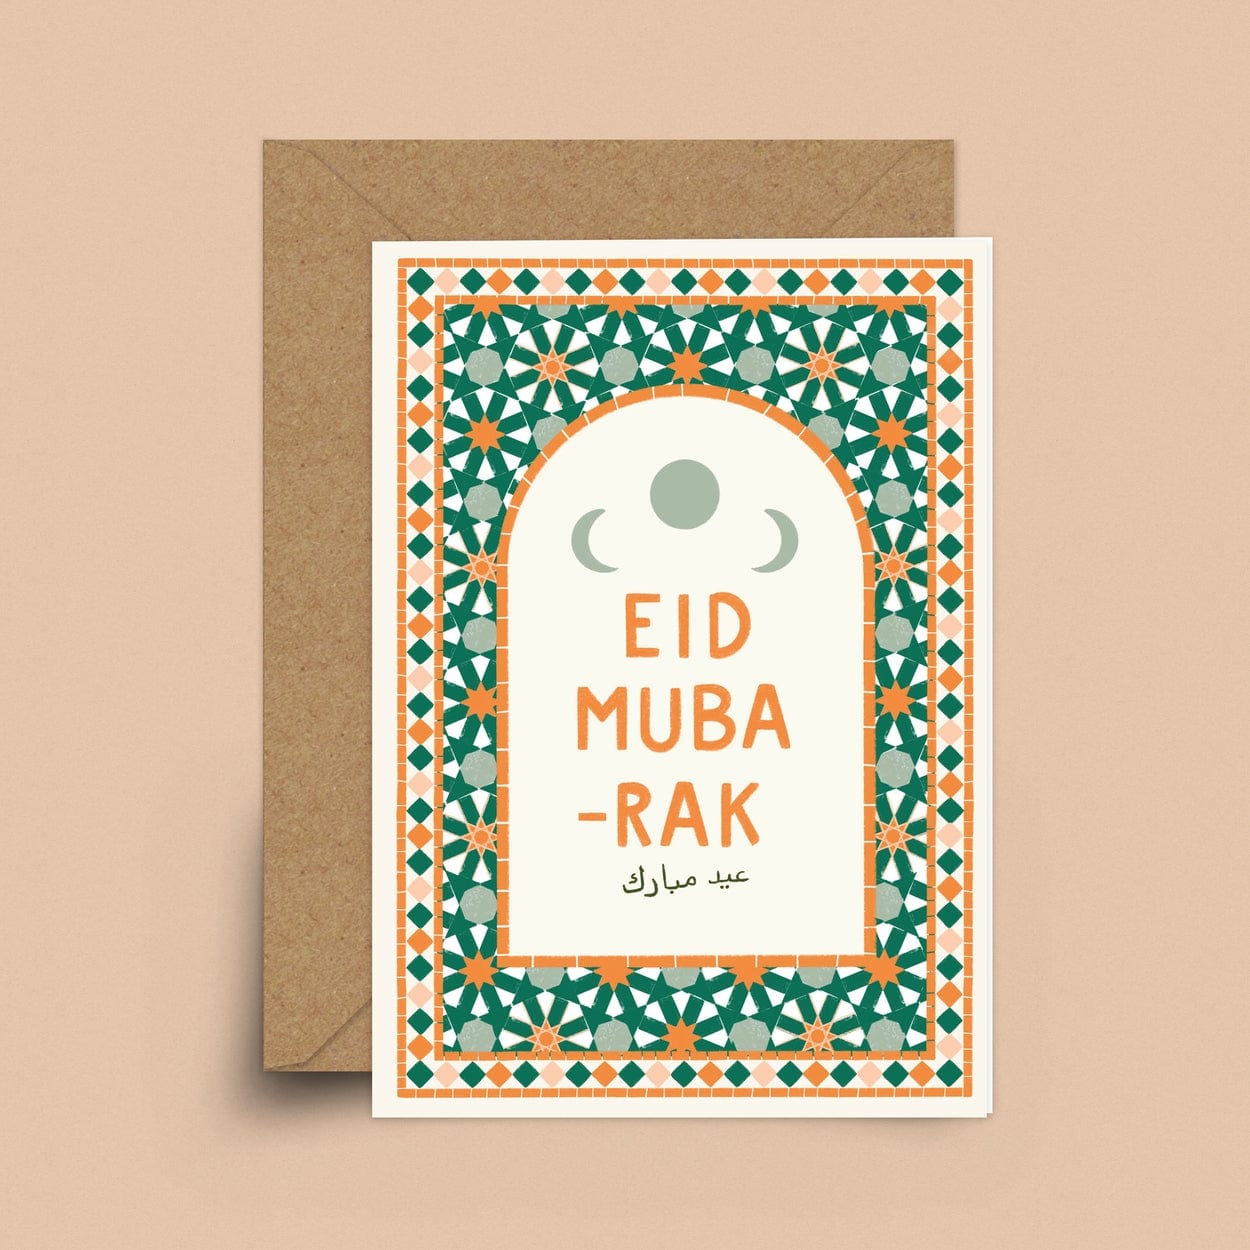 Hey, I'm Sakina Eid Mubarak Zellige Card - Migration Museum Shop